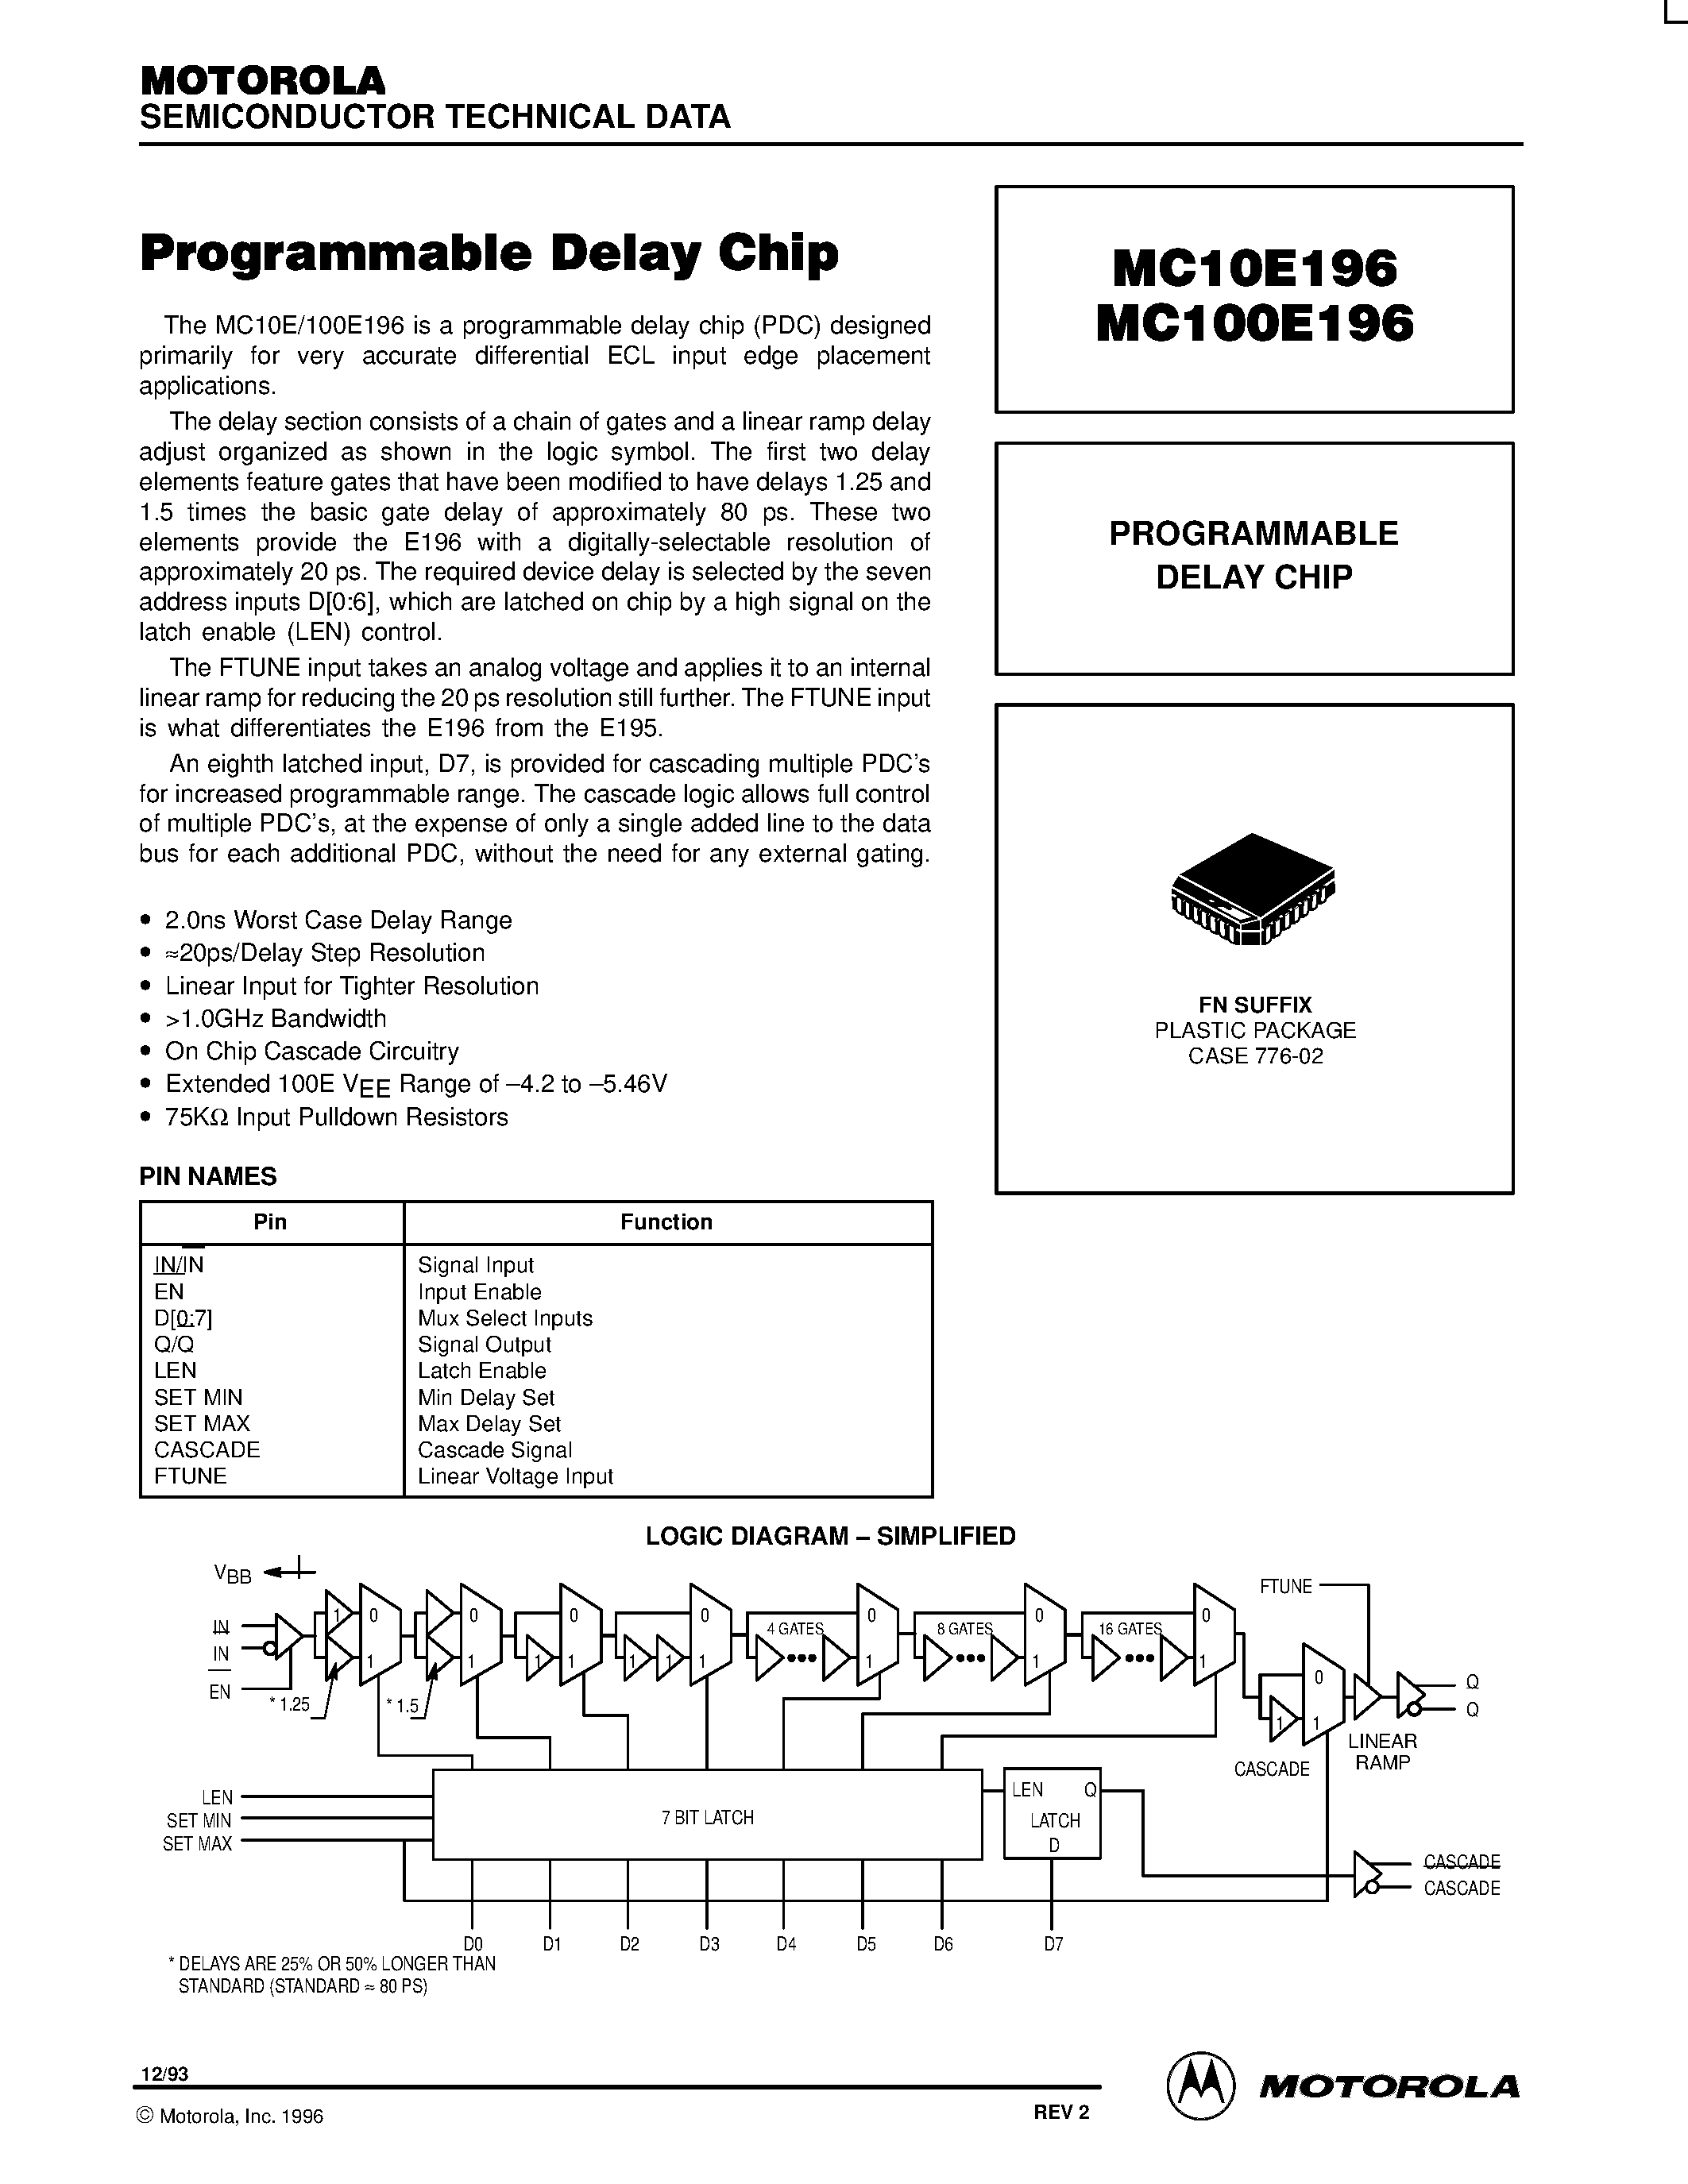 Datasheet MC100E196FN - PROGRAMMABLE DELAY CHIP page 1